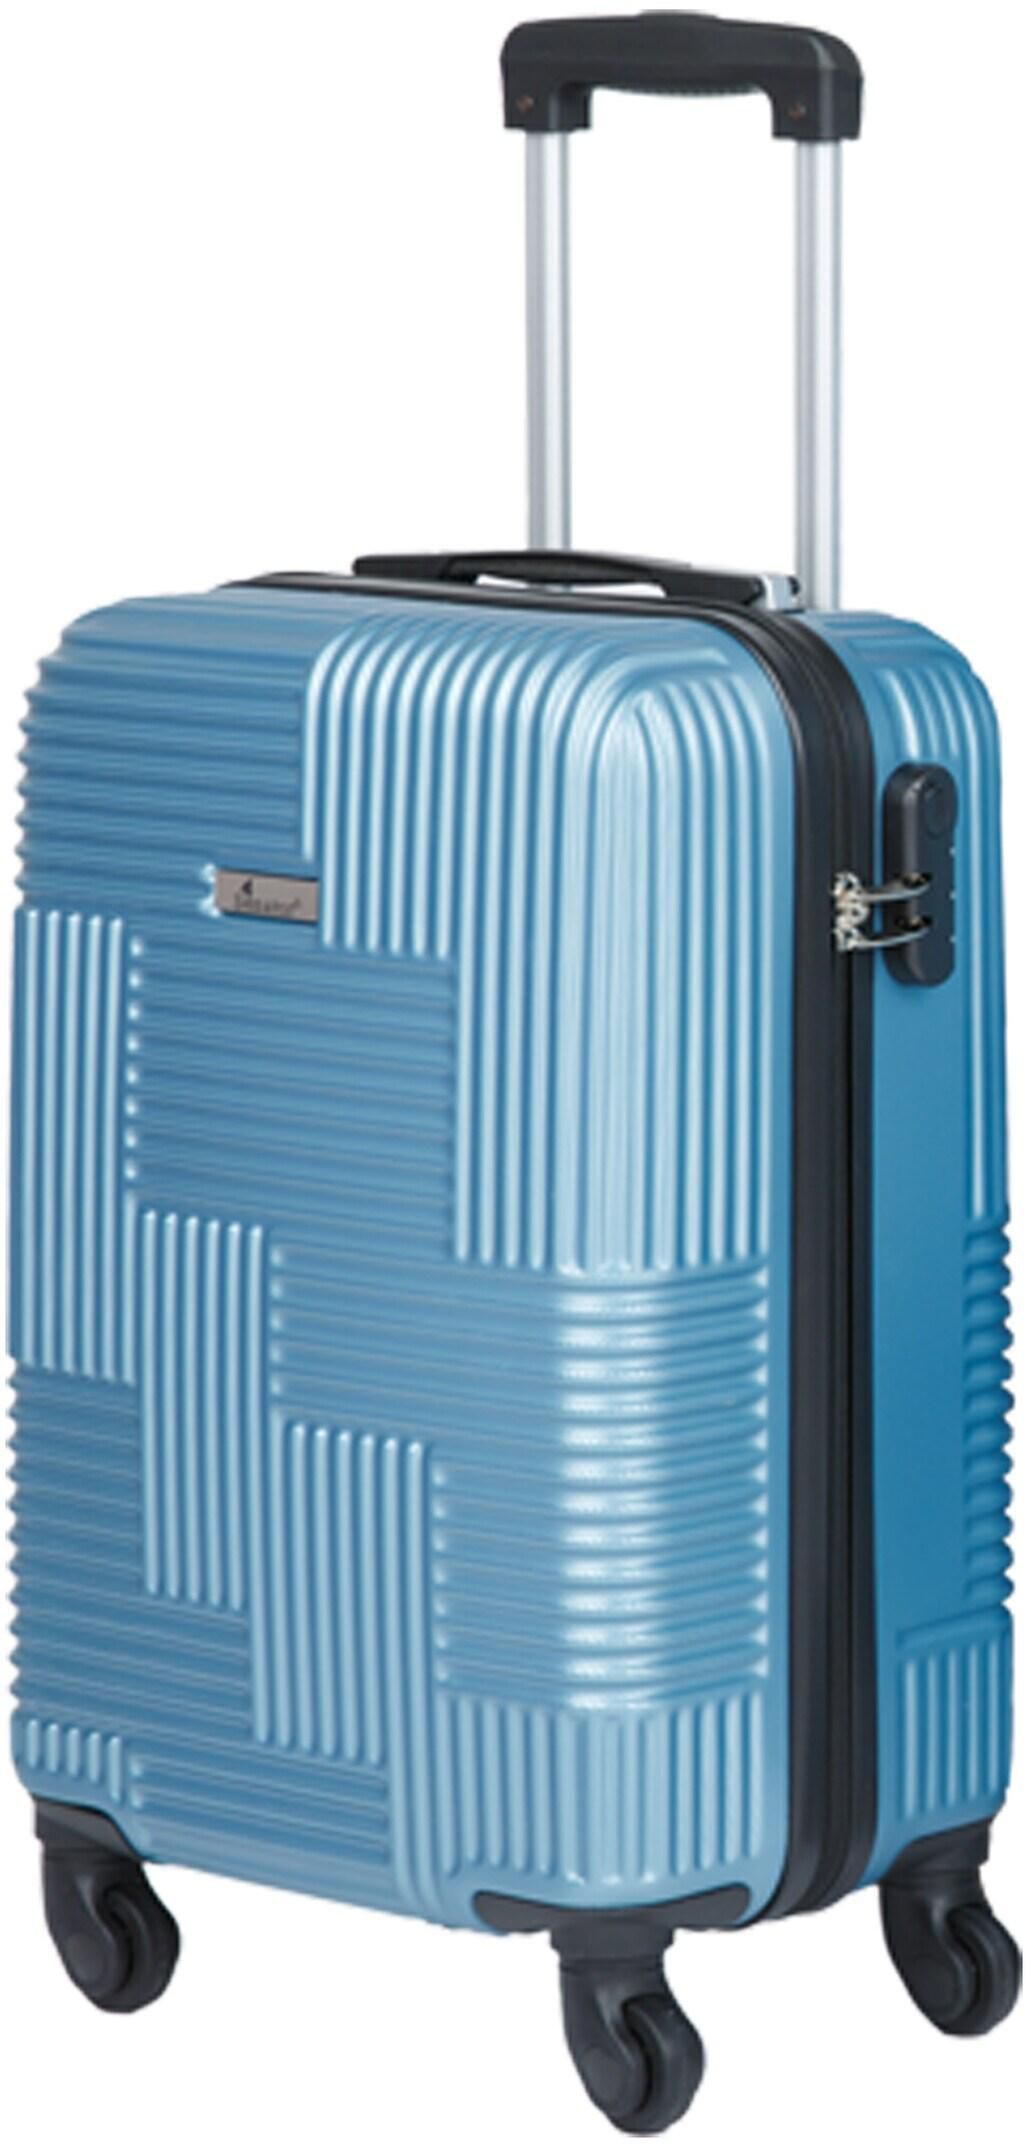 Senator Hard Case LargeLuggage Trolley Suitcase for Unisex ABS Lightweight Travel Bag with 4 Spinner Wheels KH110 Light Blue